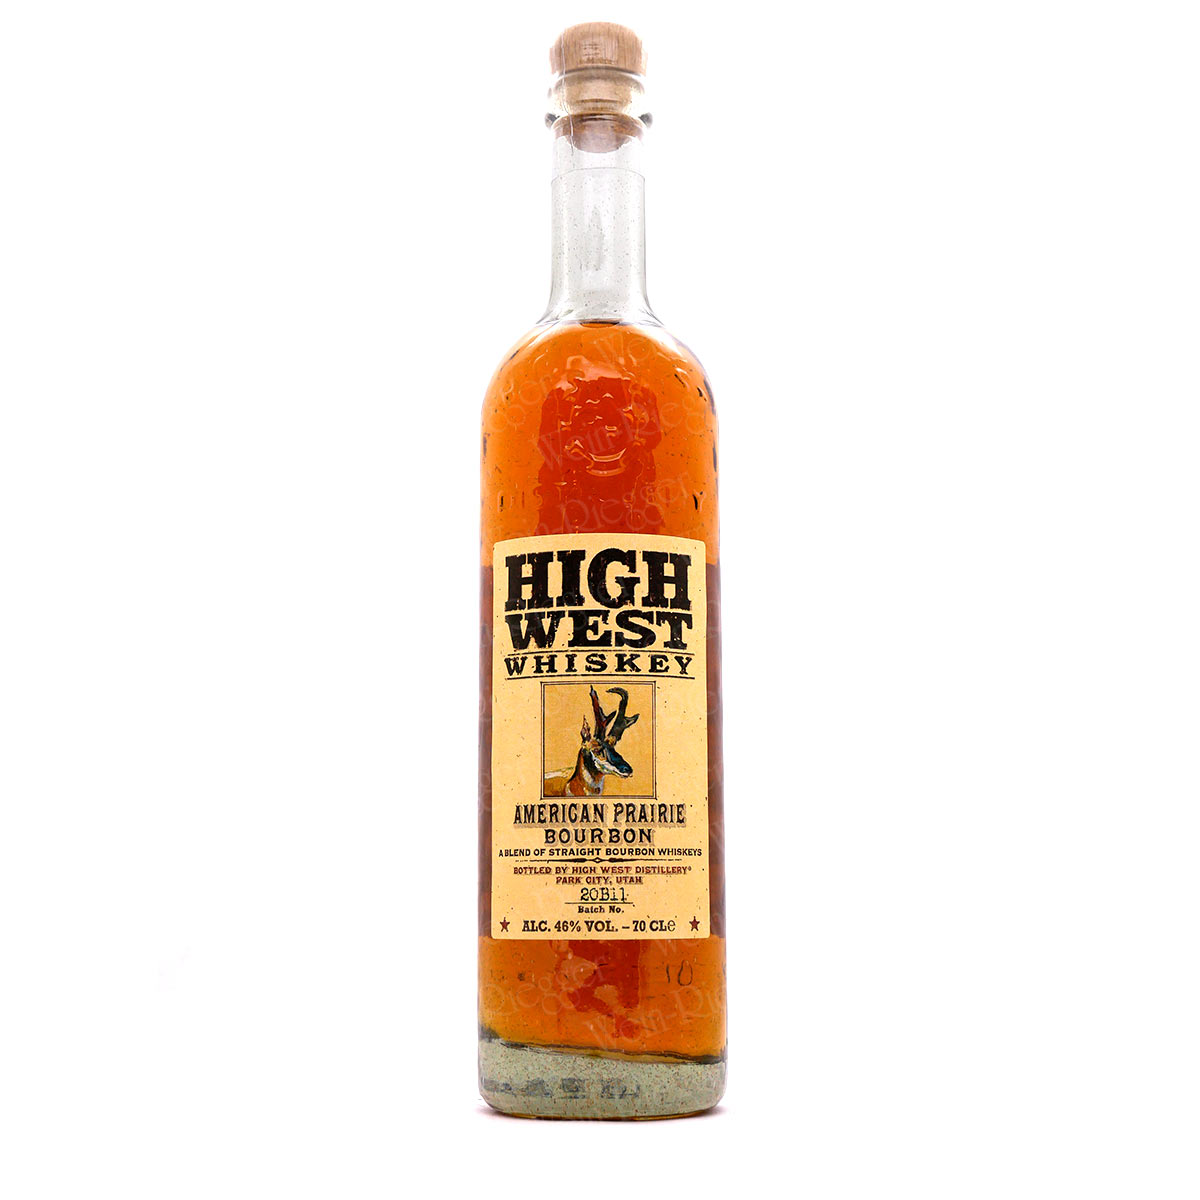 American Prairie Bourbon ( Batch No.20B11) | High West Whiskey